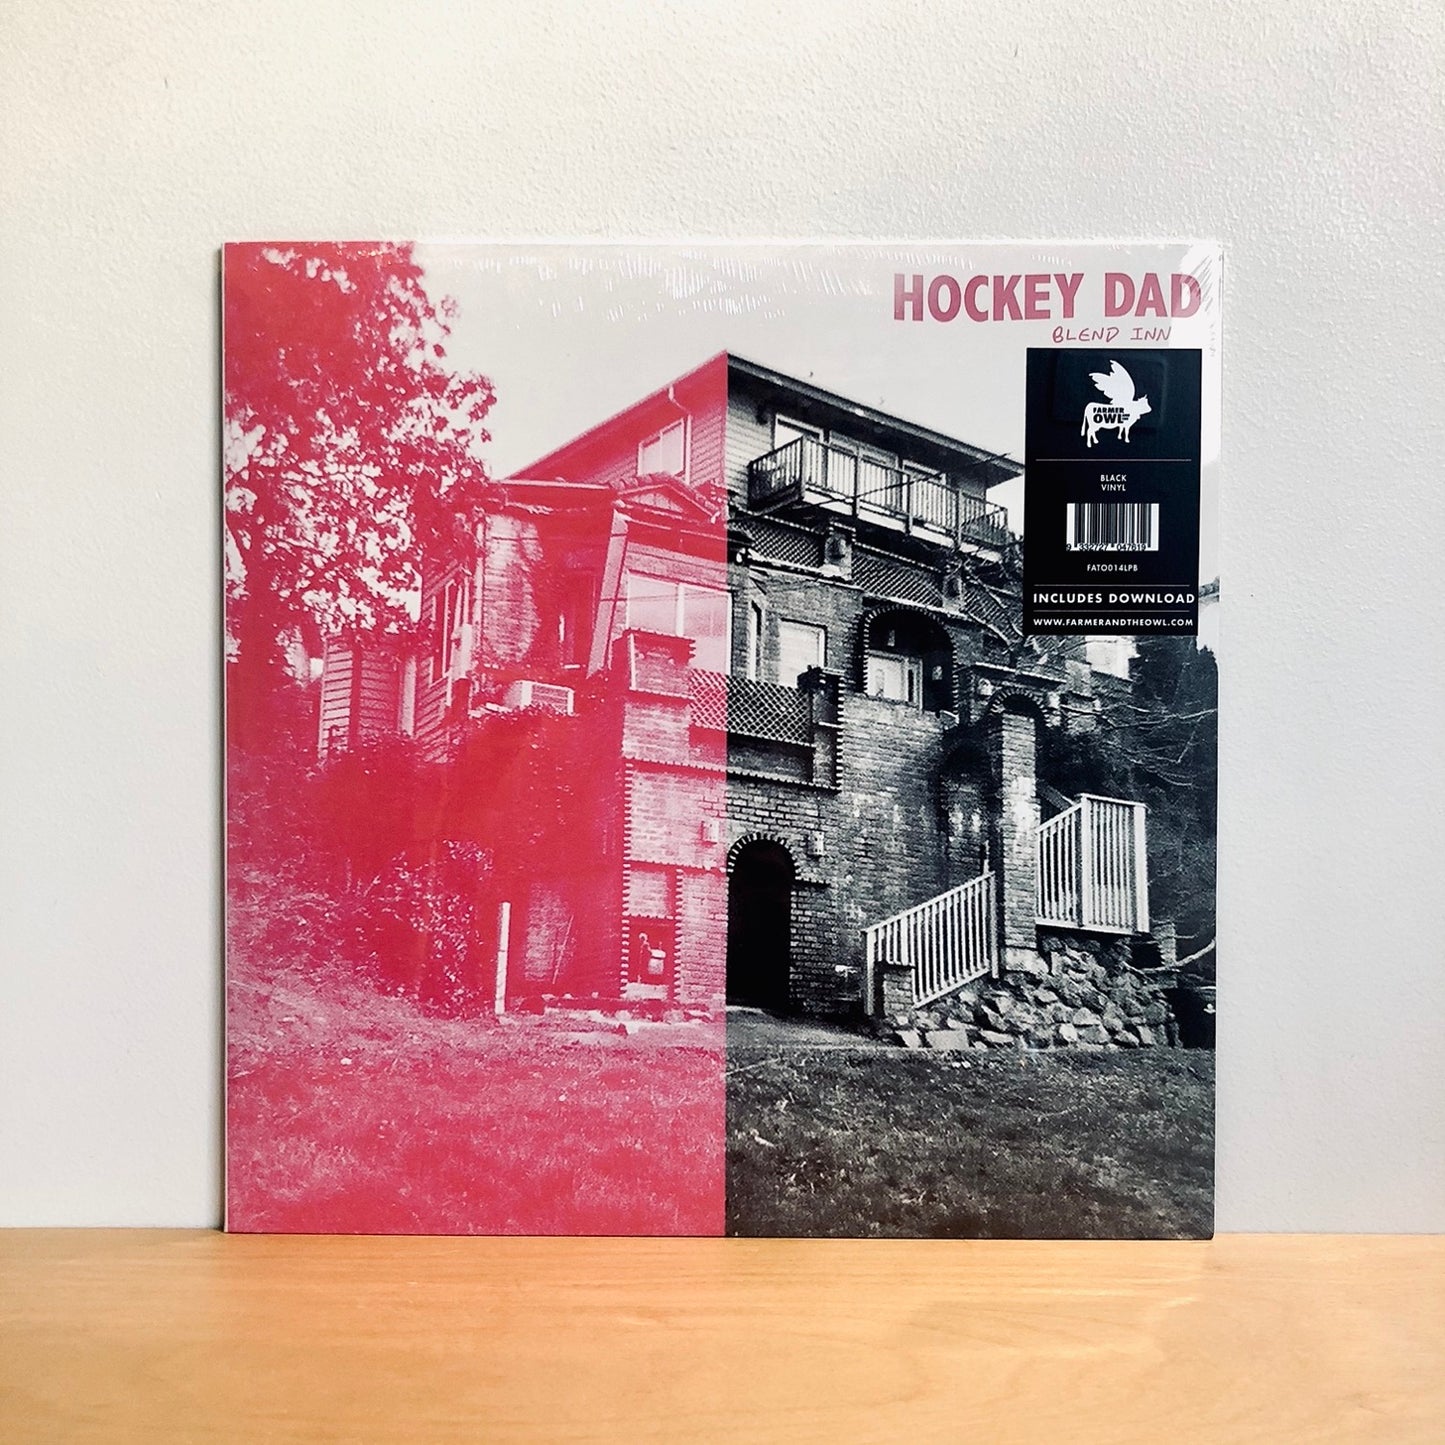 Hockey Dad - Blend Inn. LP